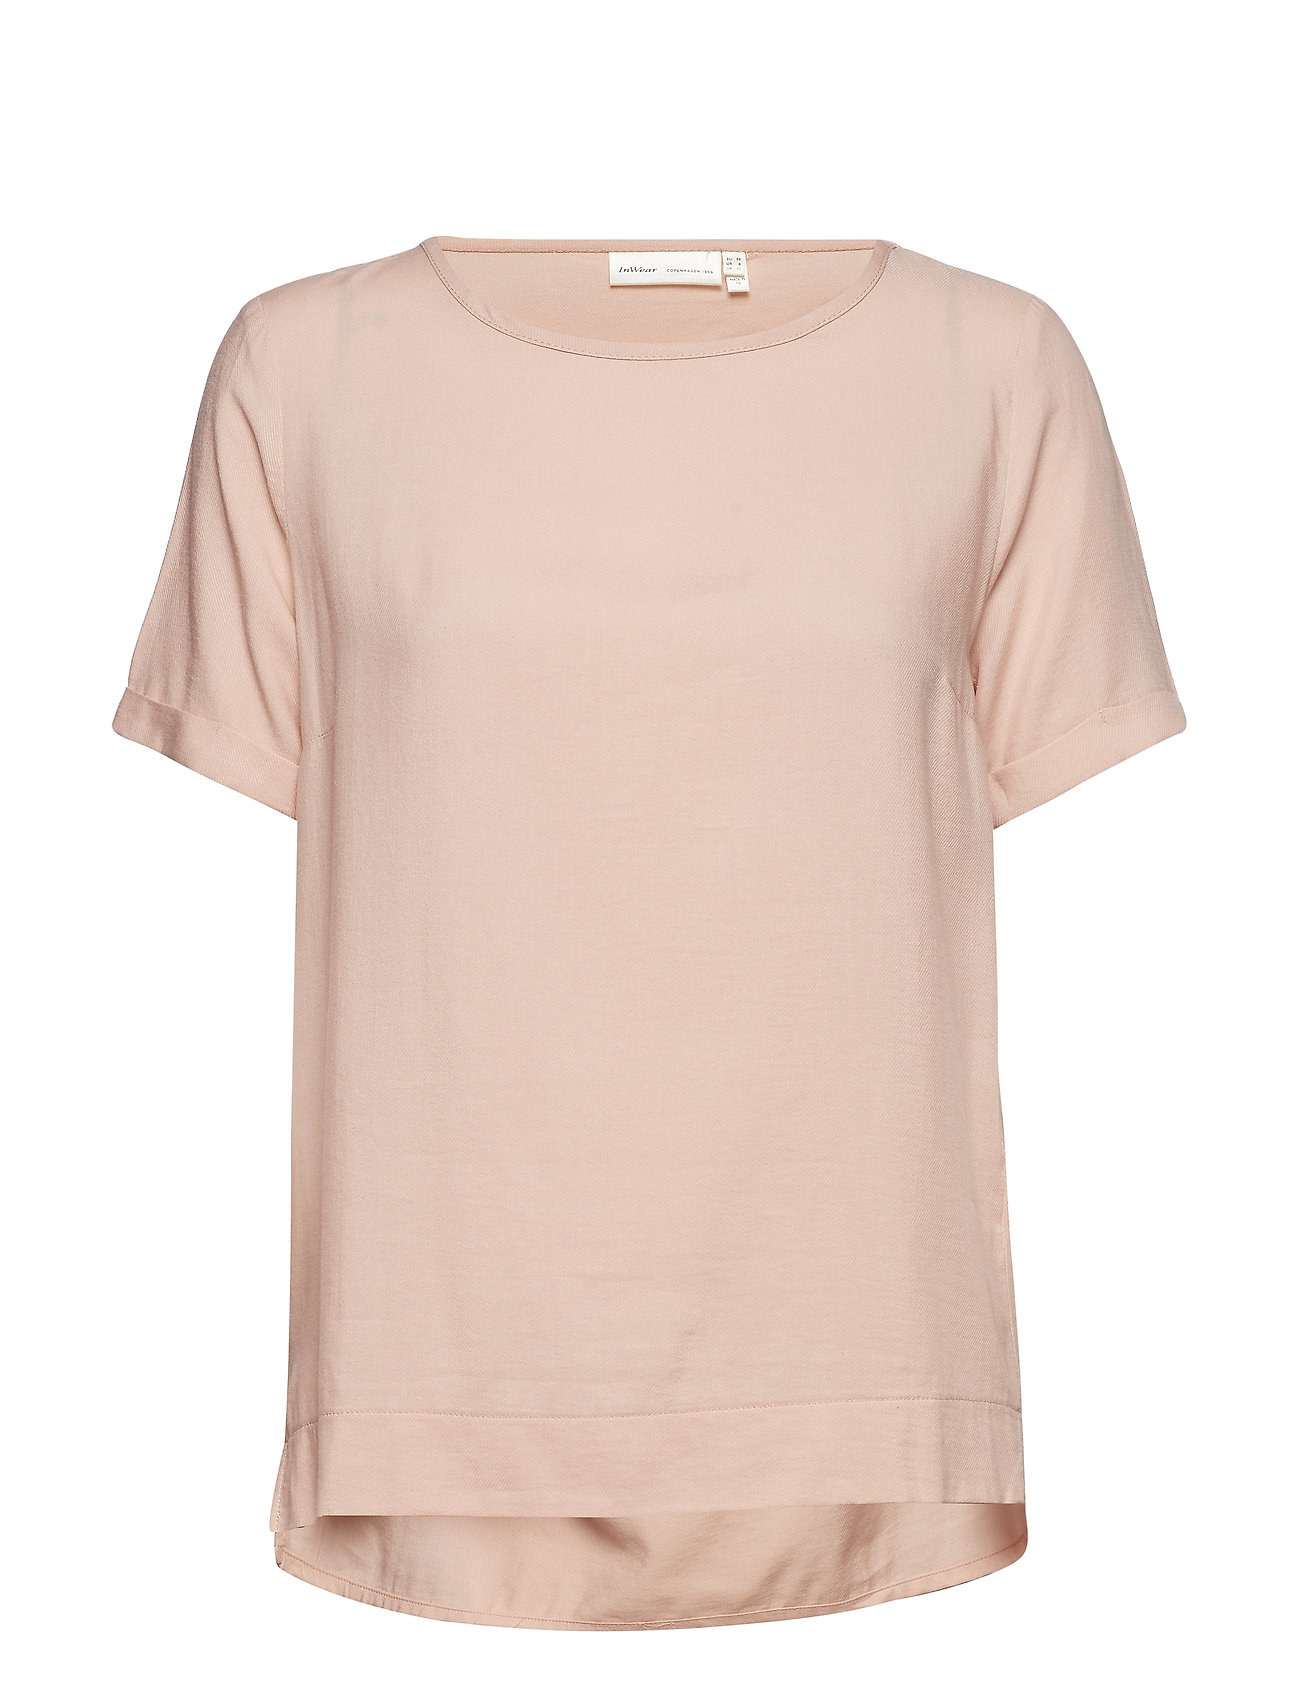 Blake Top Zl T-shirts & Tops Short-sleeved Vaaleanpunainen InWear